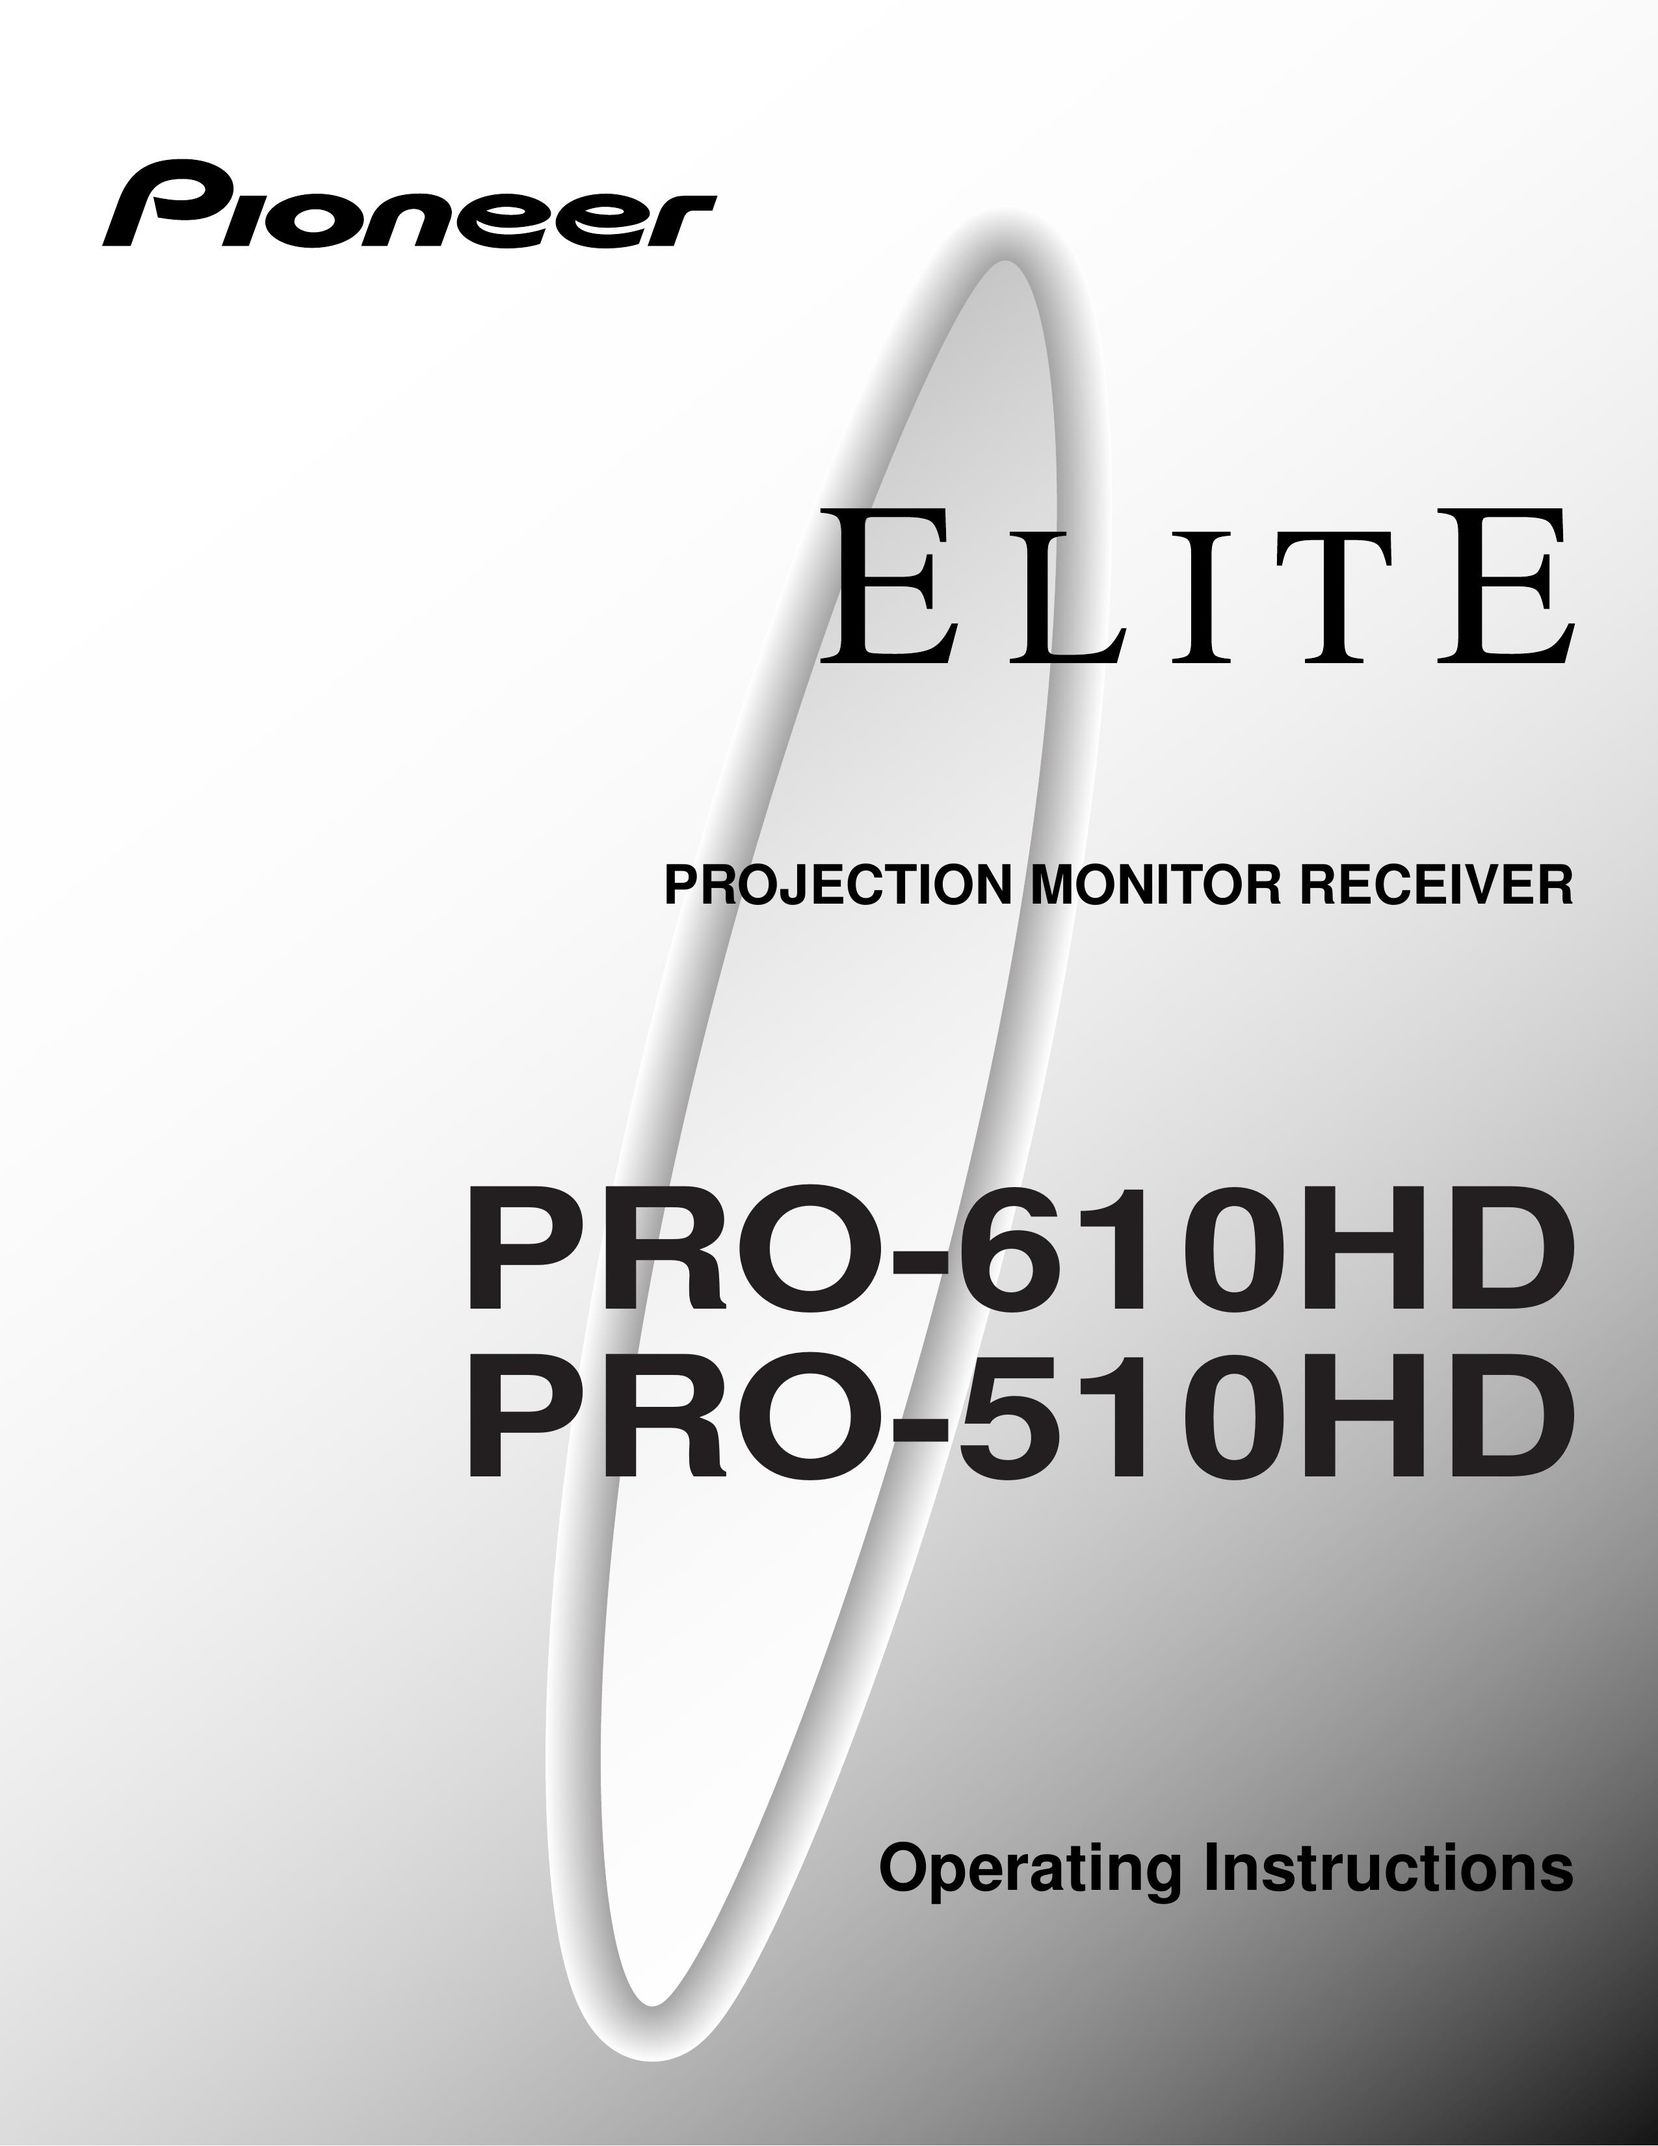 Pioneer PRO-610HD TV Receiver User Manual